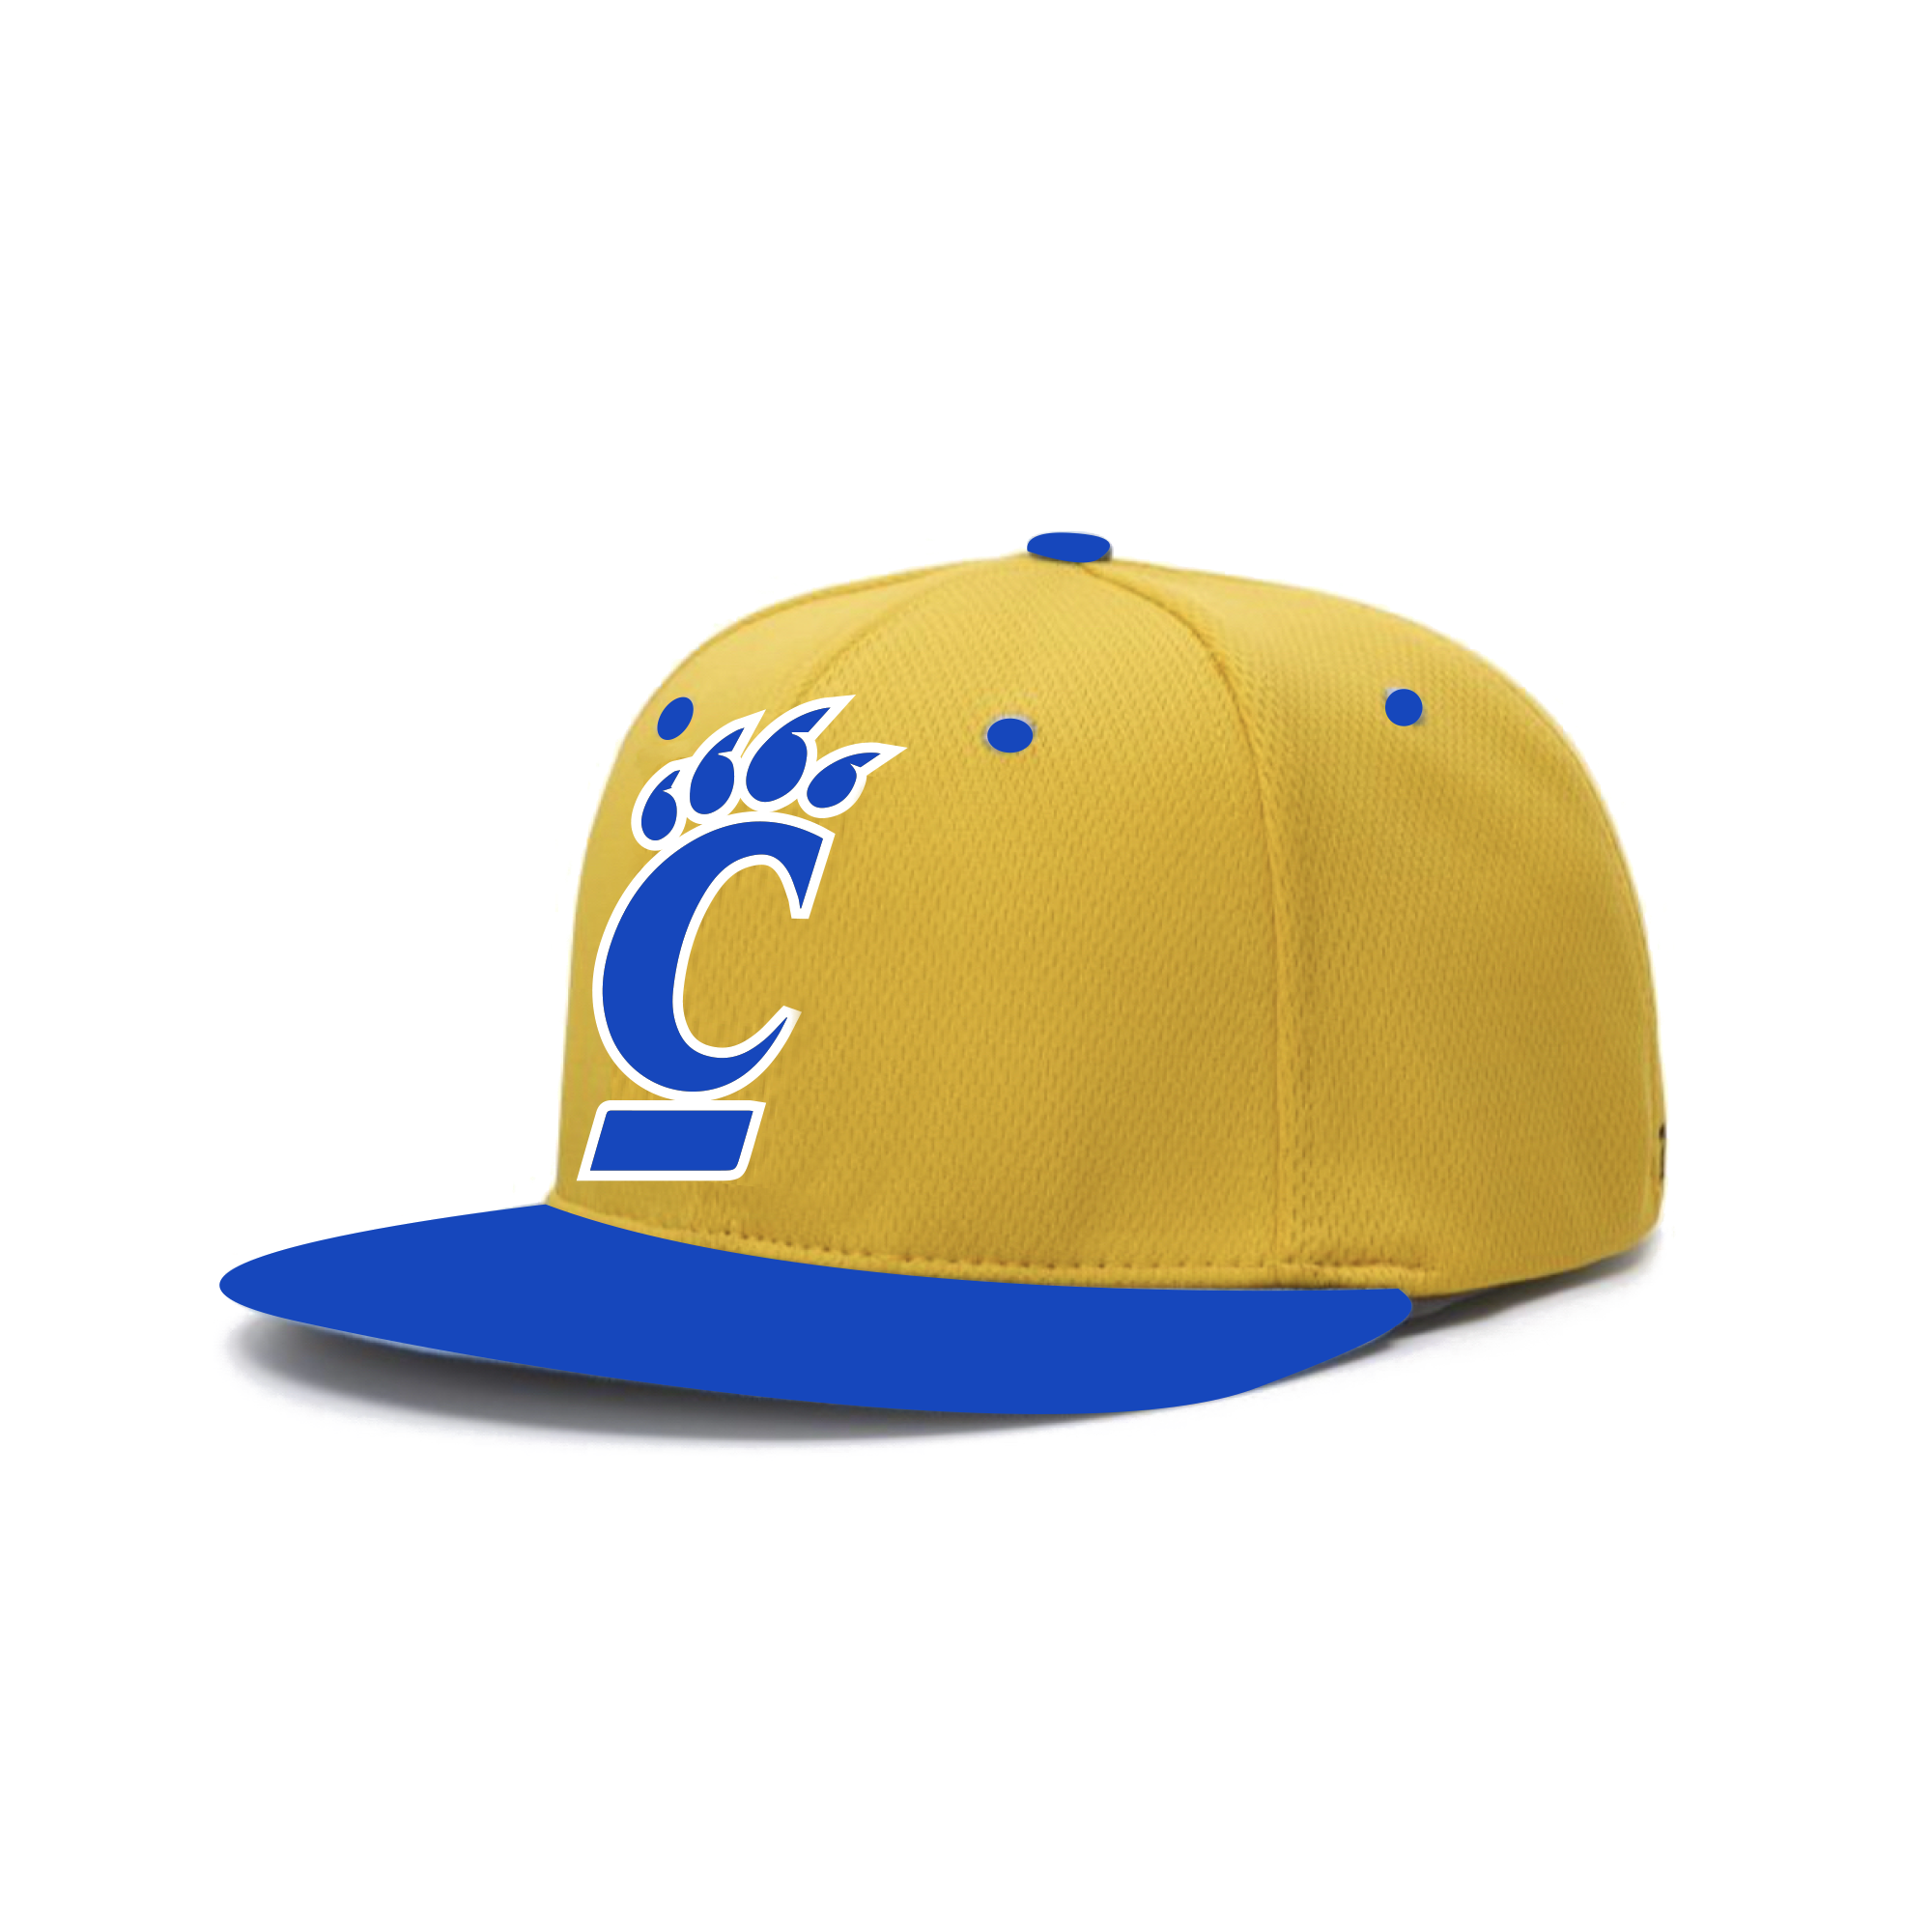 CT Bearcats - Baseball Cap